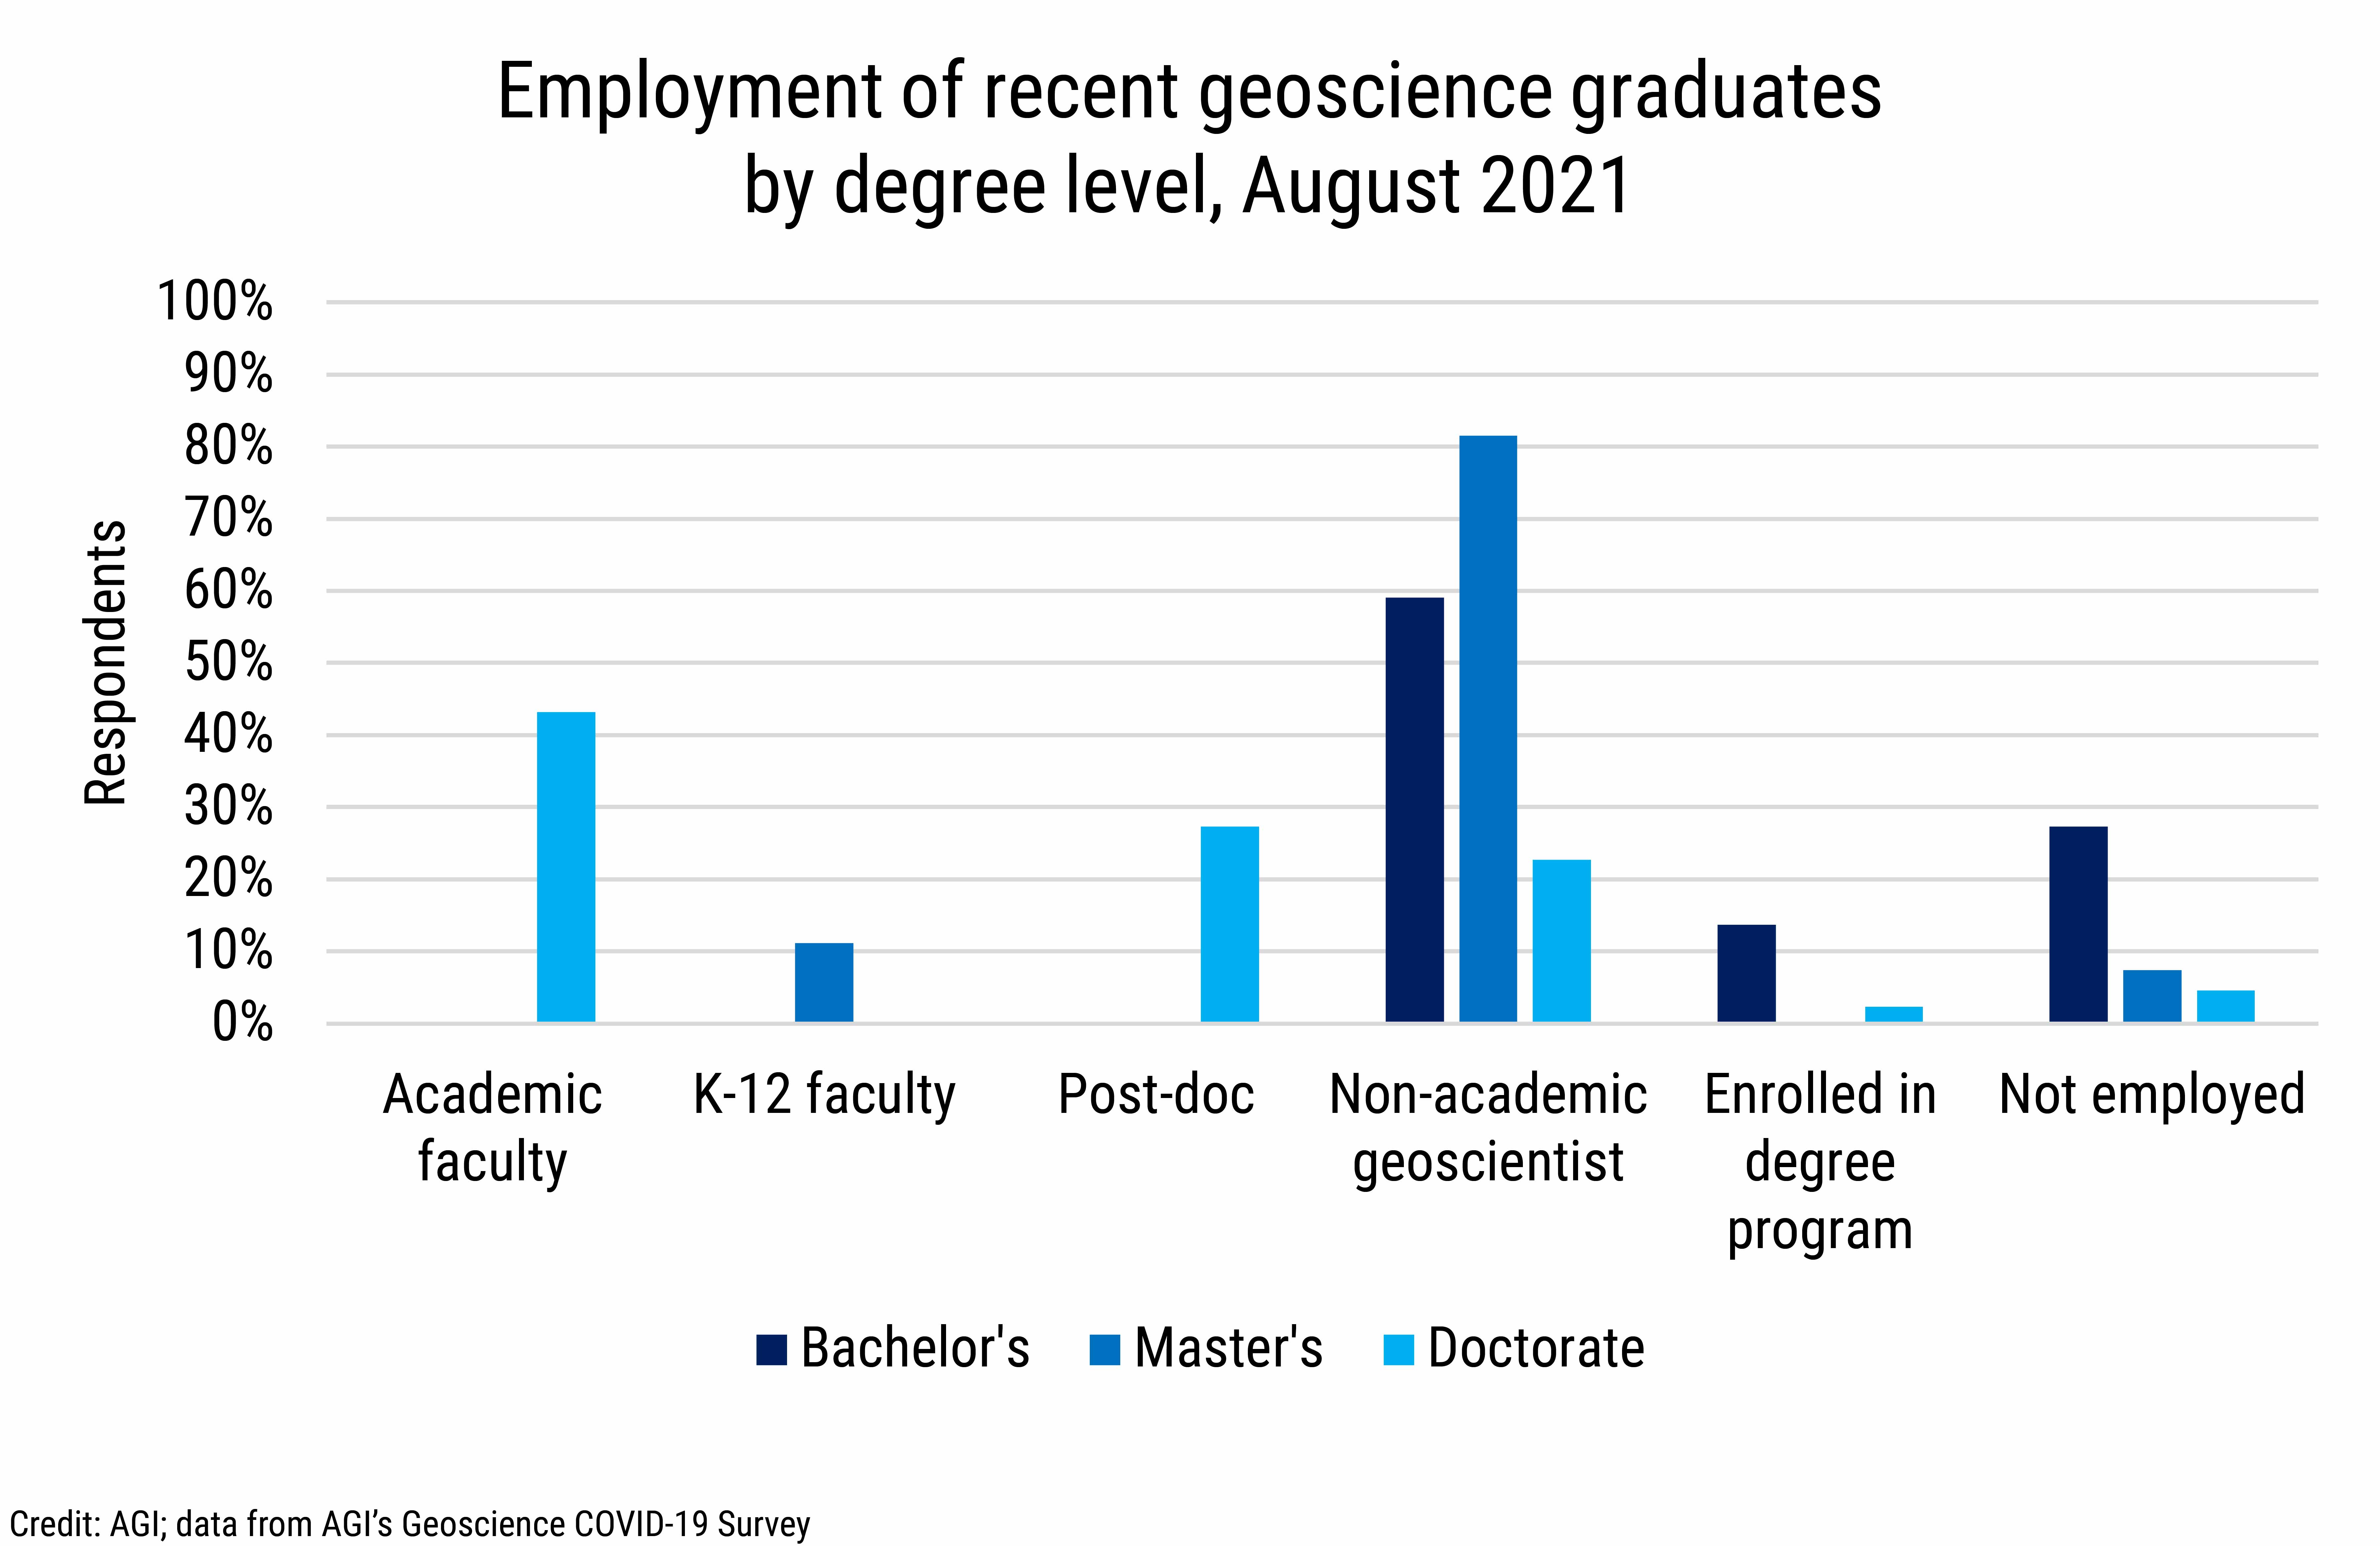 DB_2021-026 chart 06: Employment of recent geoscience graduates by degree level, August 2021(Credit: AGI; data from AGI's Geoscience COVID-19 Survey)